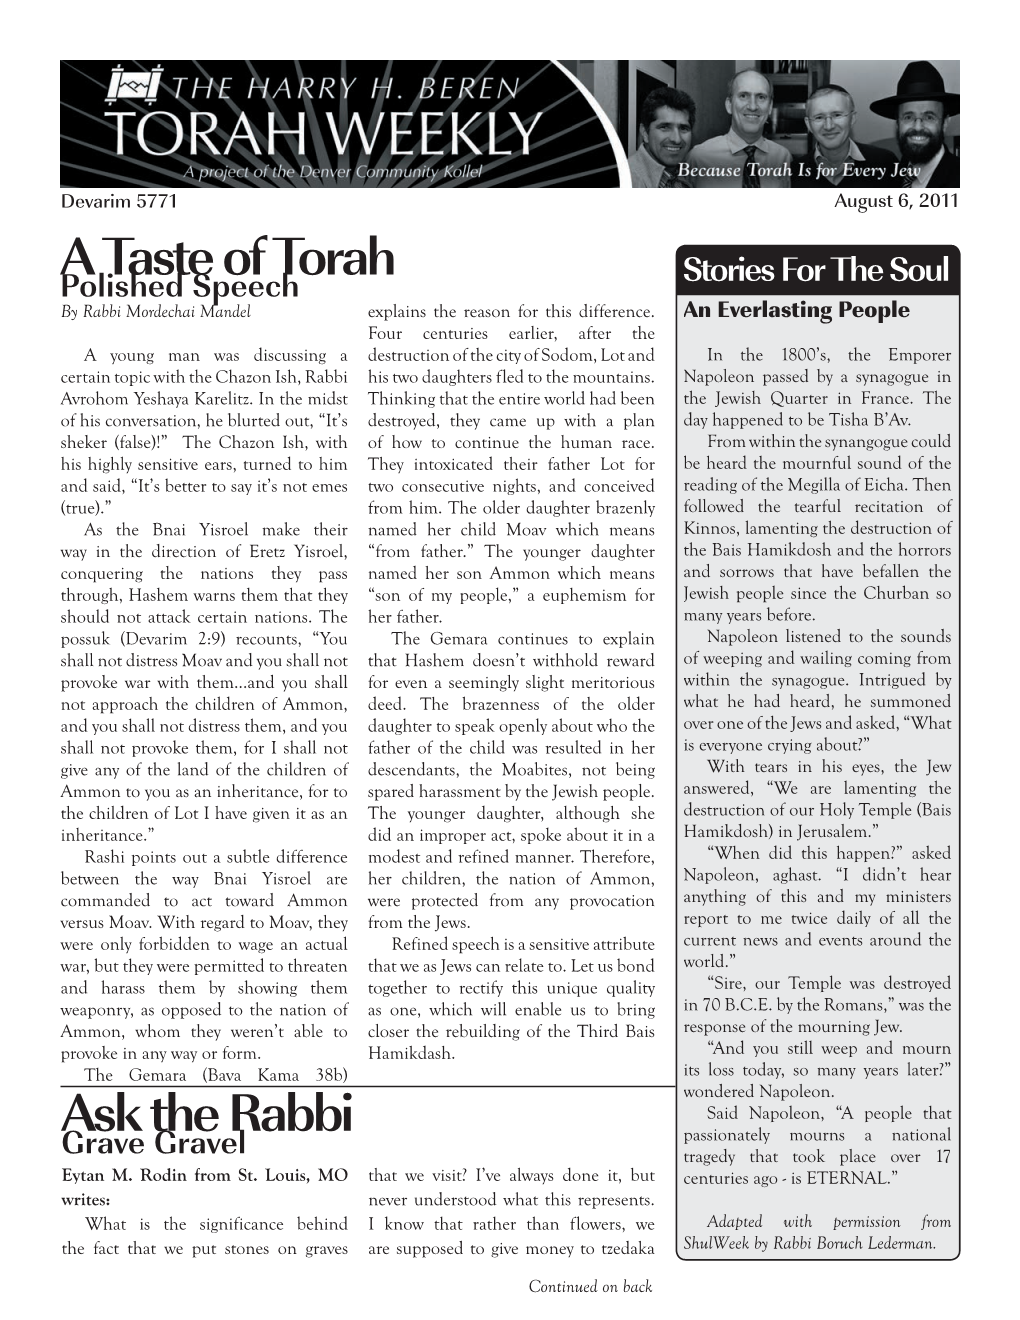 Ask the Rabbi a Taste of Torah